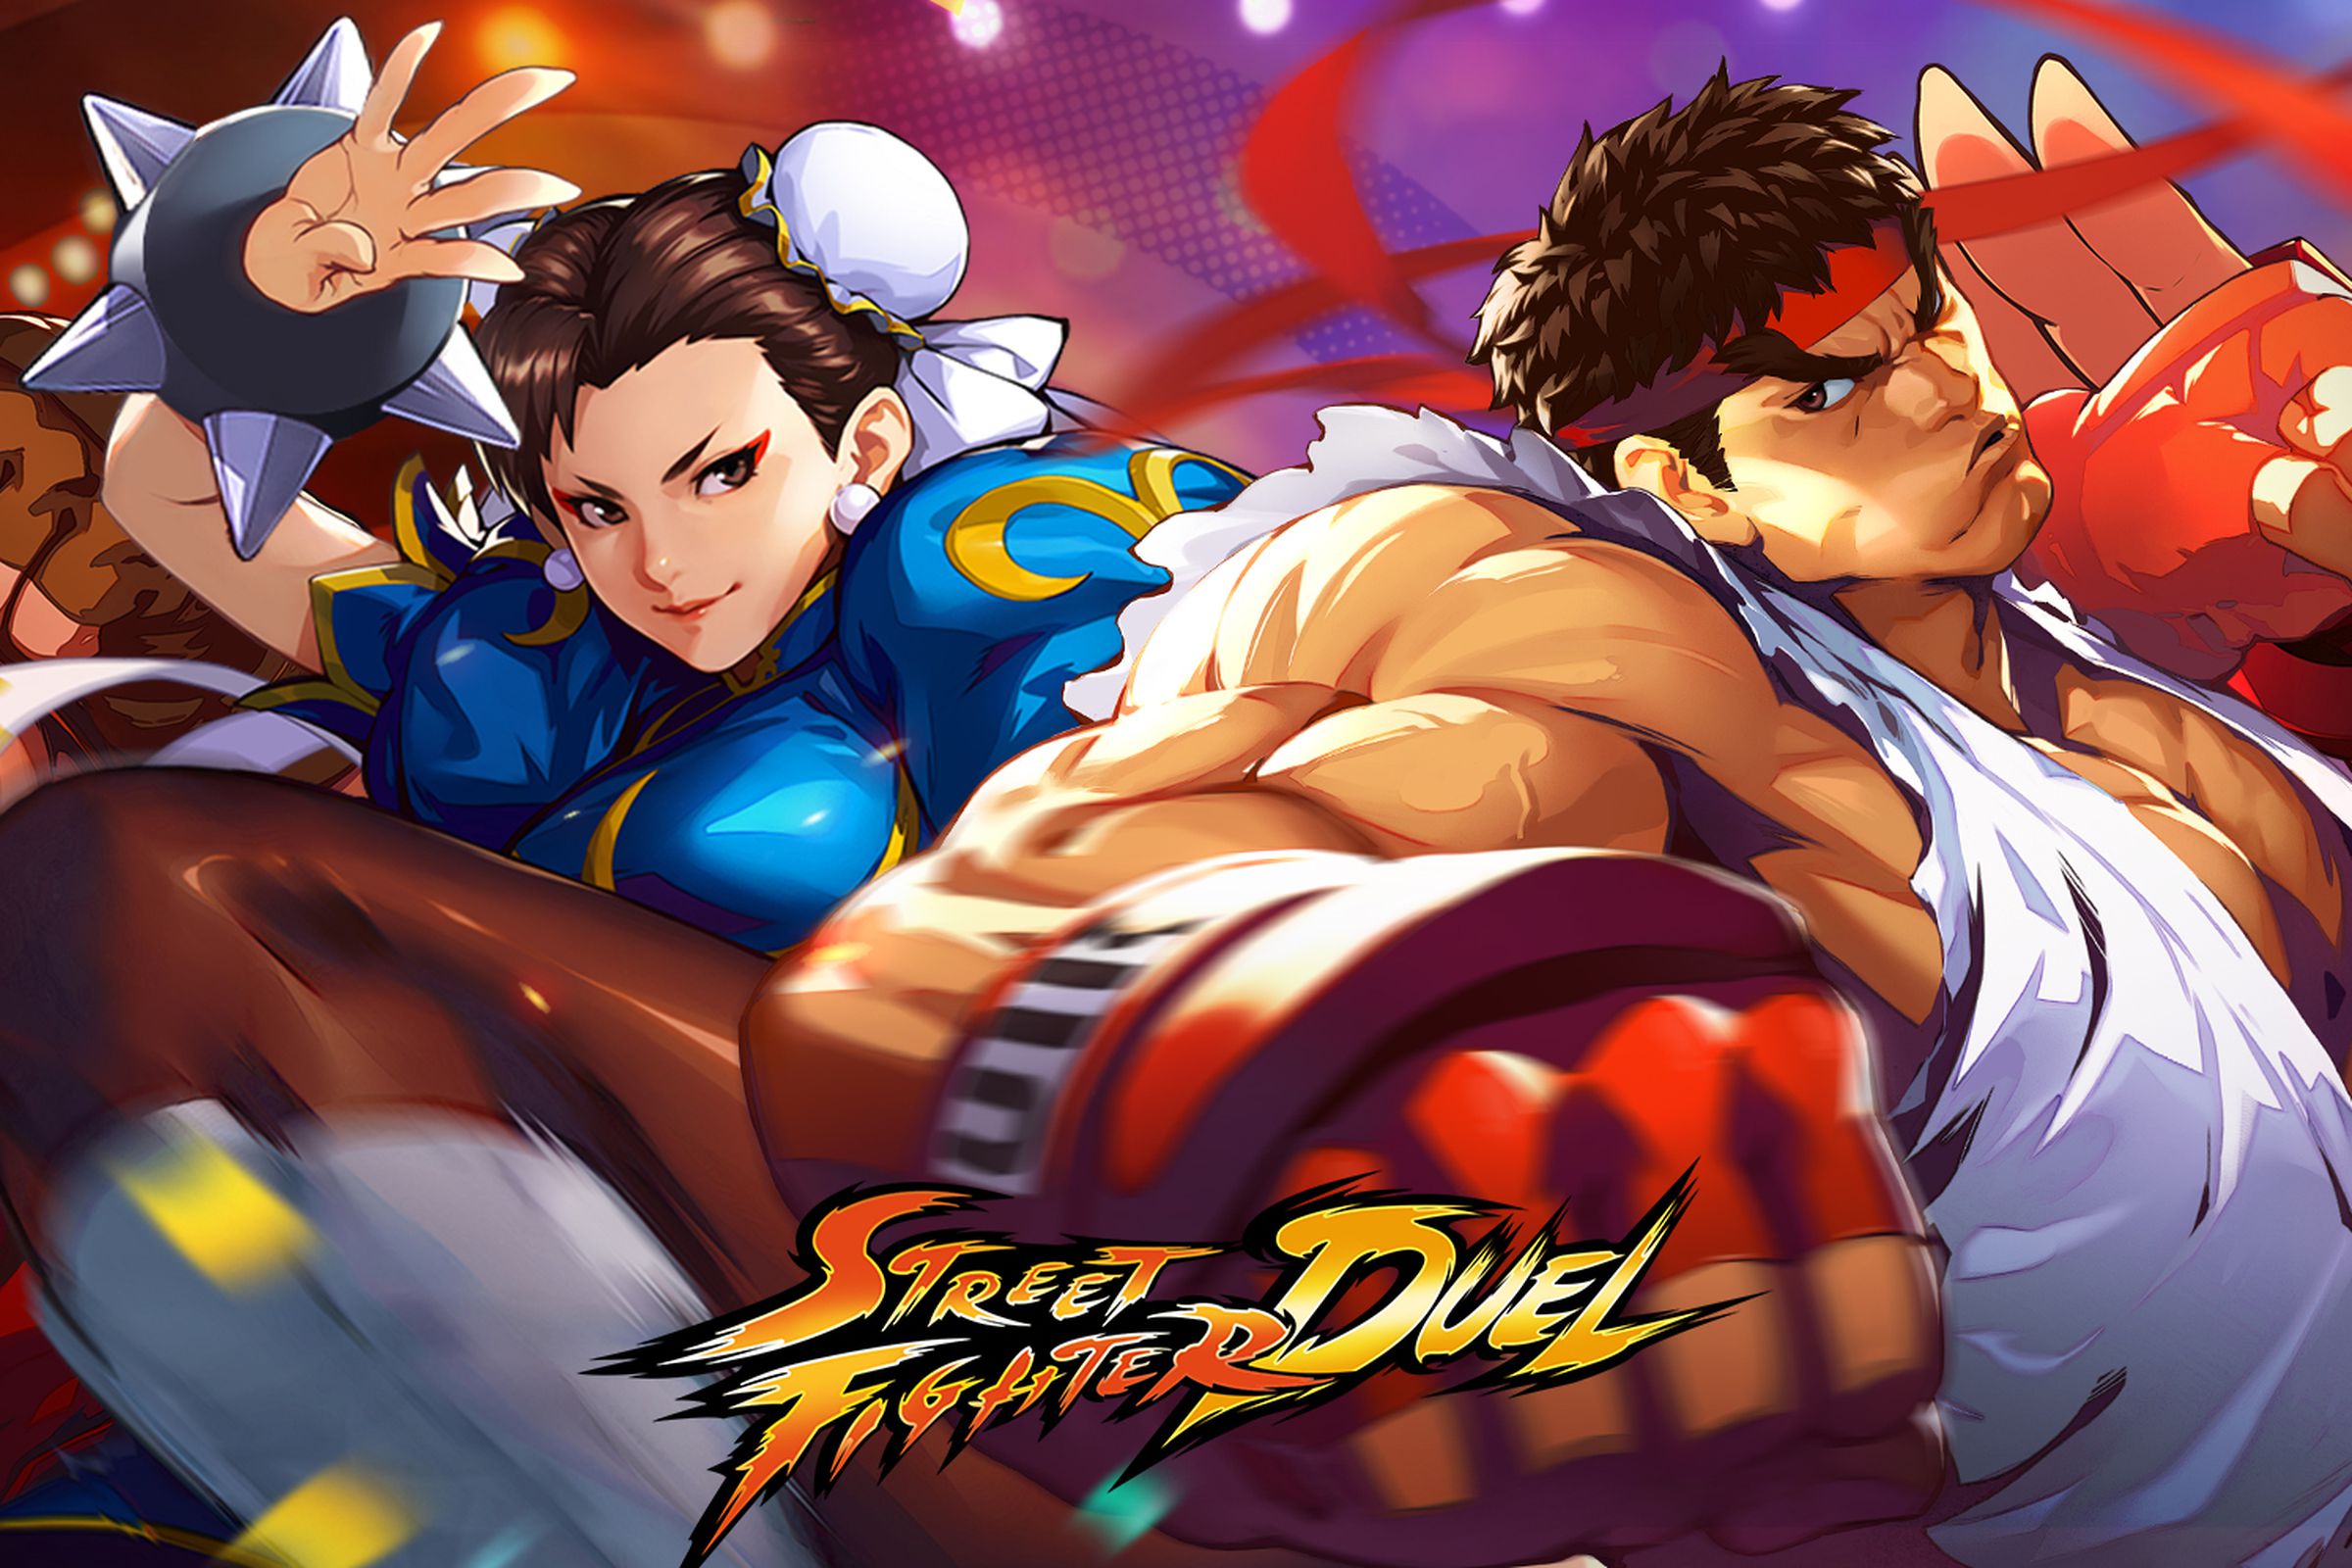 Promotional art for Street Fighter: Duel.